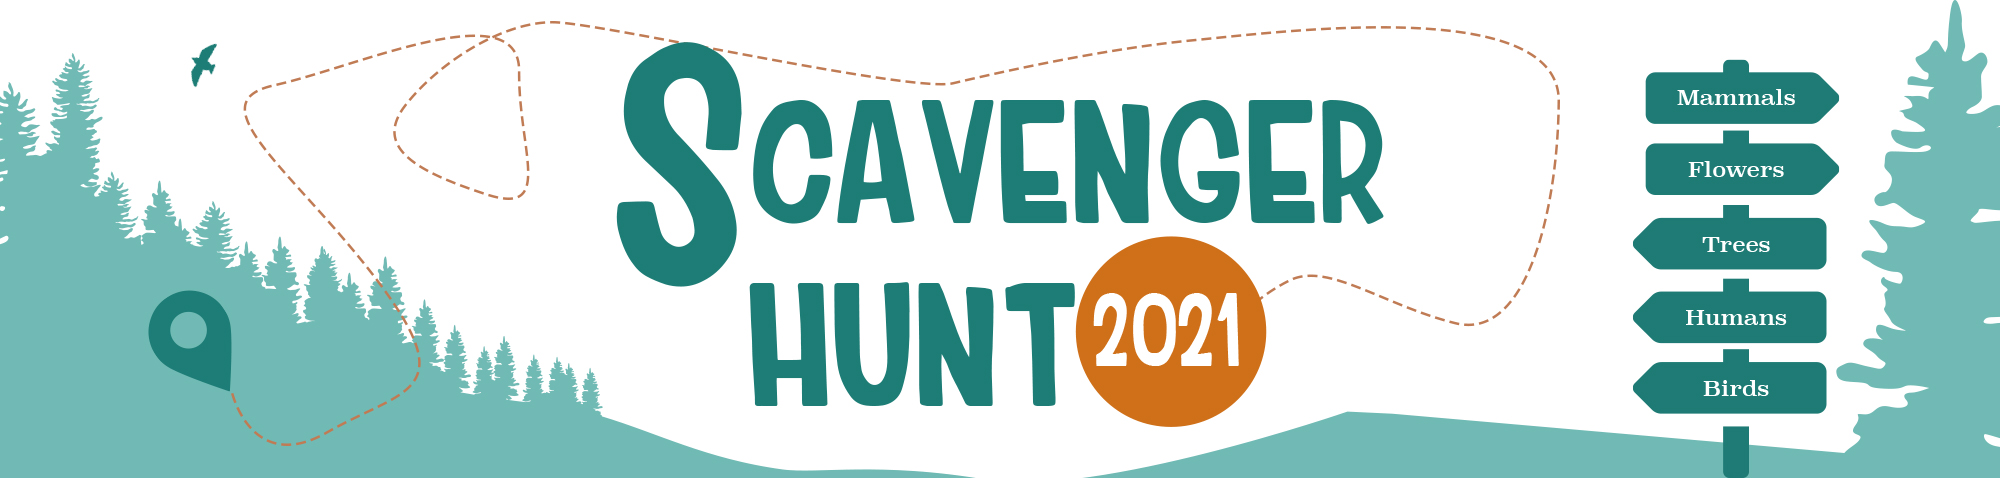 2021 Scavenger Hunts